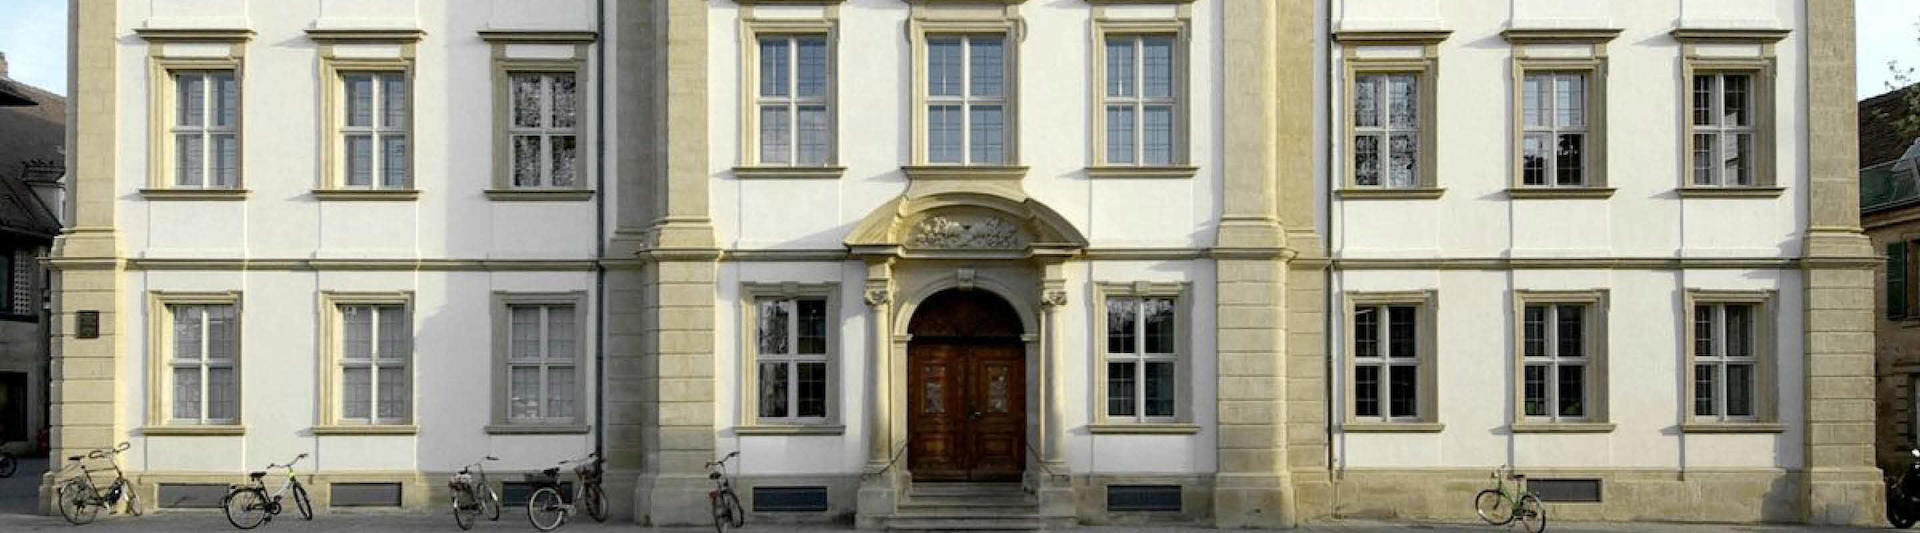 Public Library Erlangen 